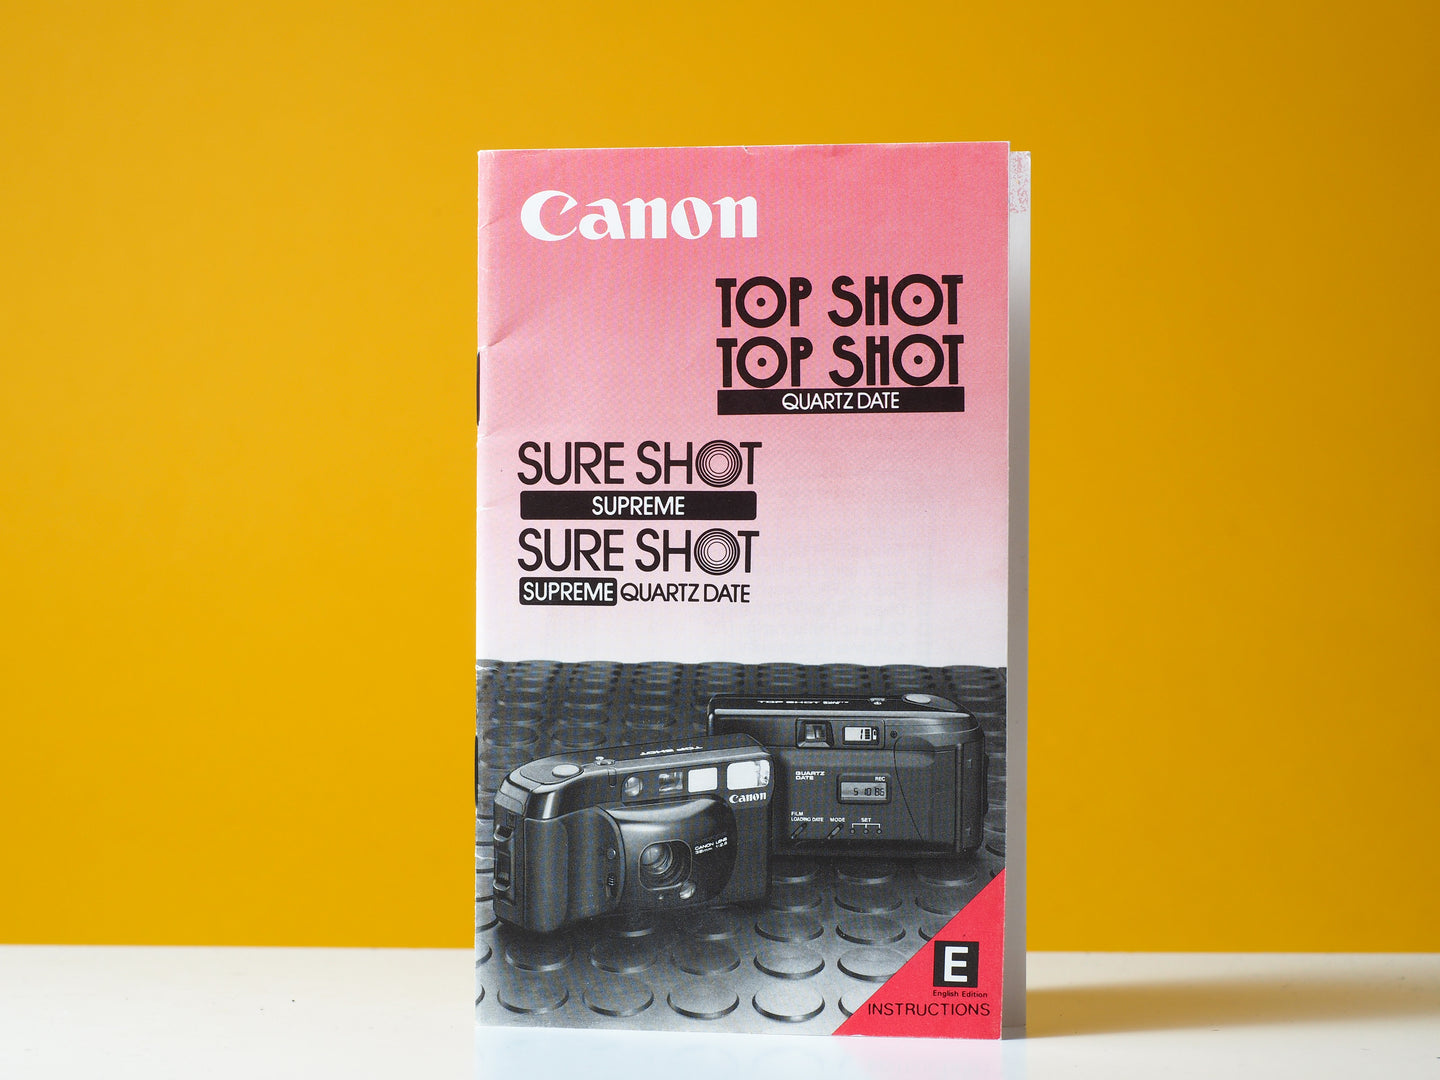 Canon Top Shot Sure Shot Manual